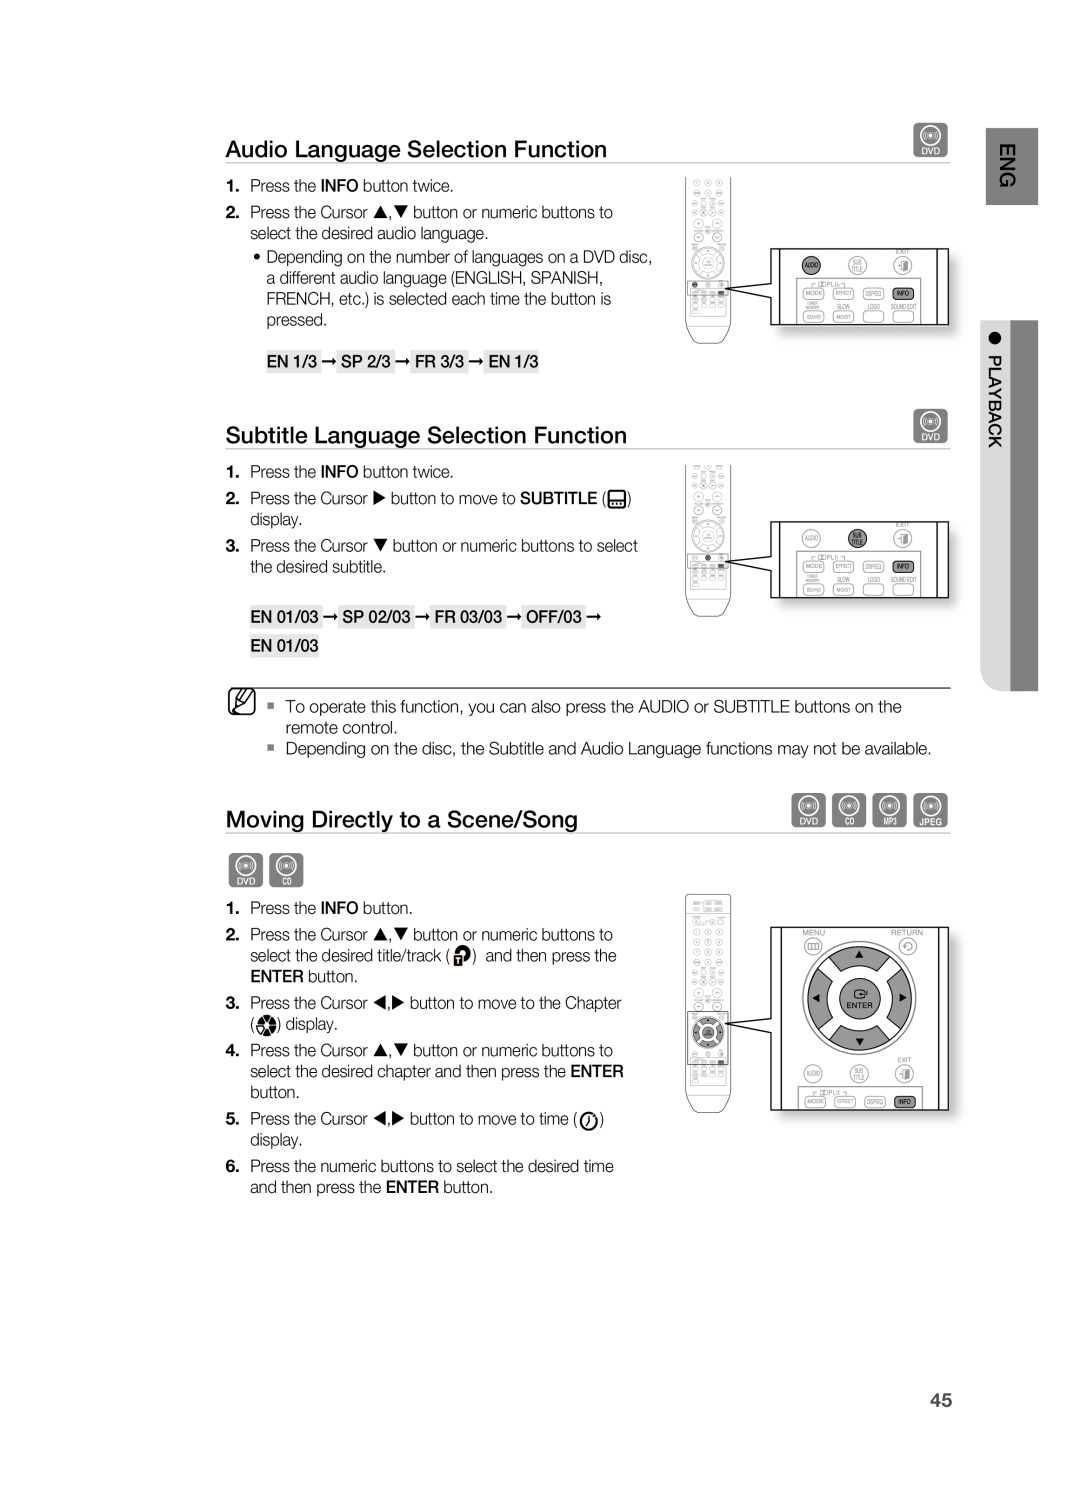 Samsung HT-TWZ315 manual dBAG, Audio Language Selection function, Subtitle Language Selection function 